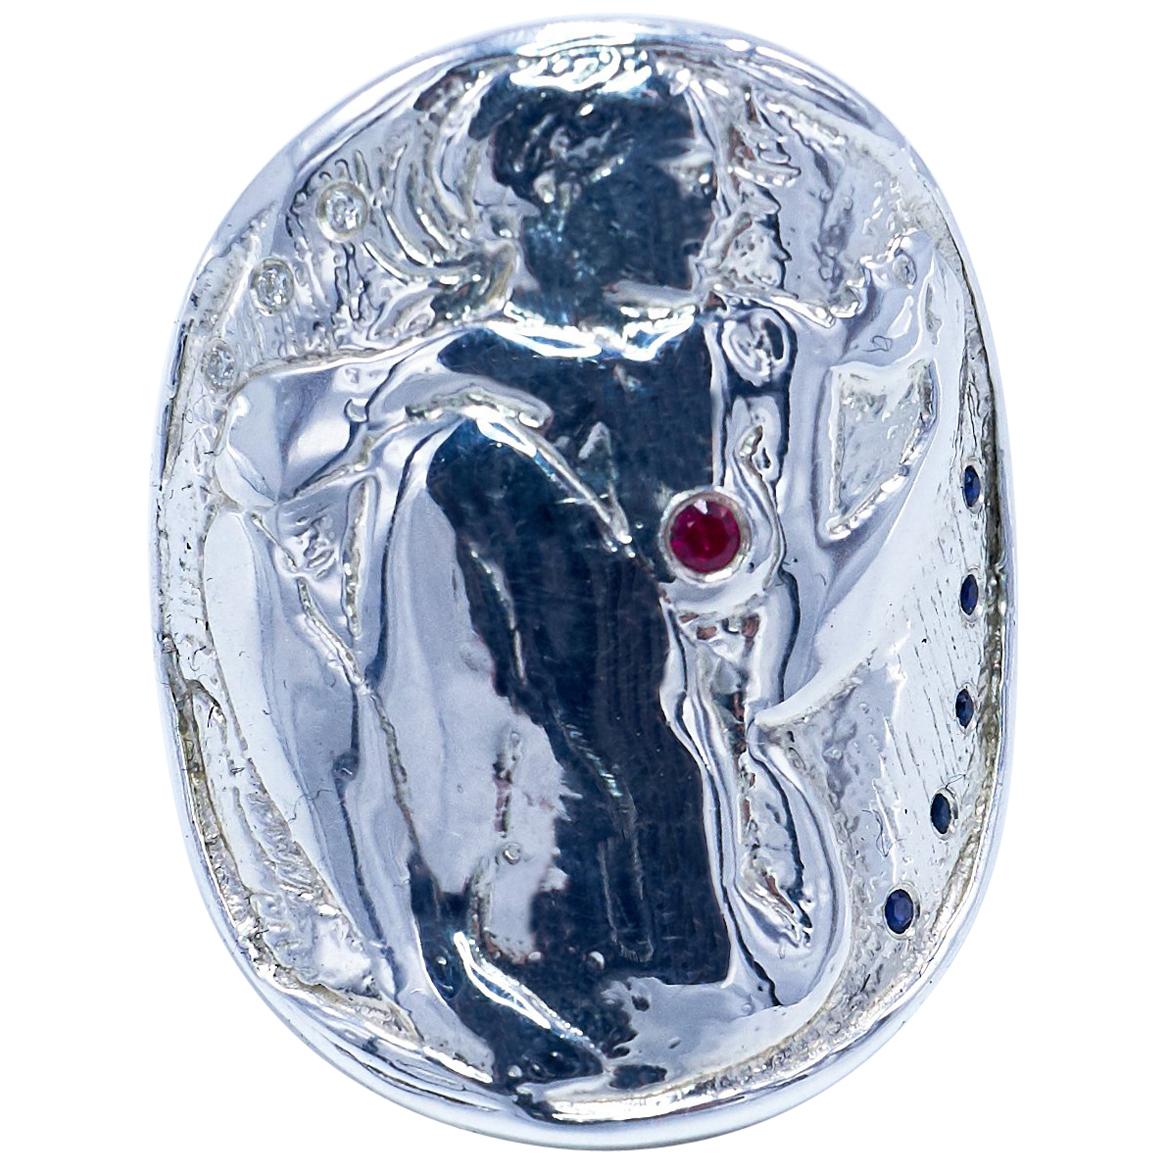 Cocktail Ring Medaille Münze Silber Frau Weißer Diamant Rubin Blauer SaphirJ Dauphin

J DAUPHIN 